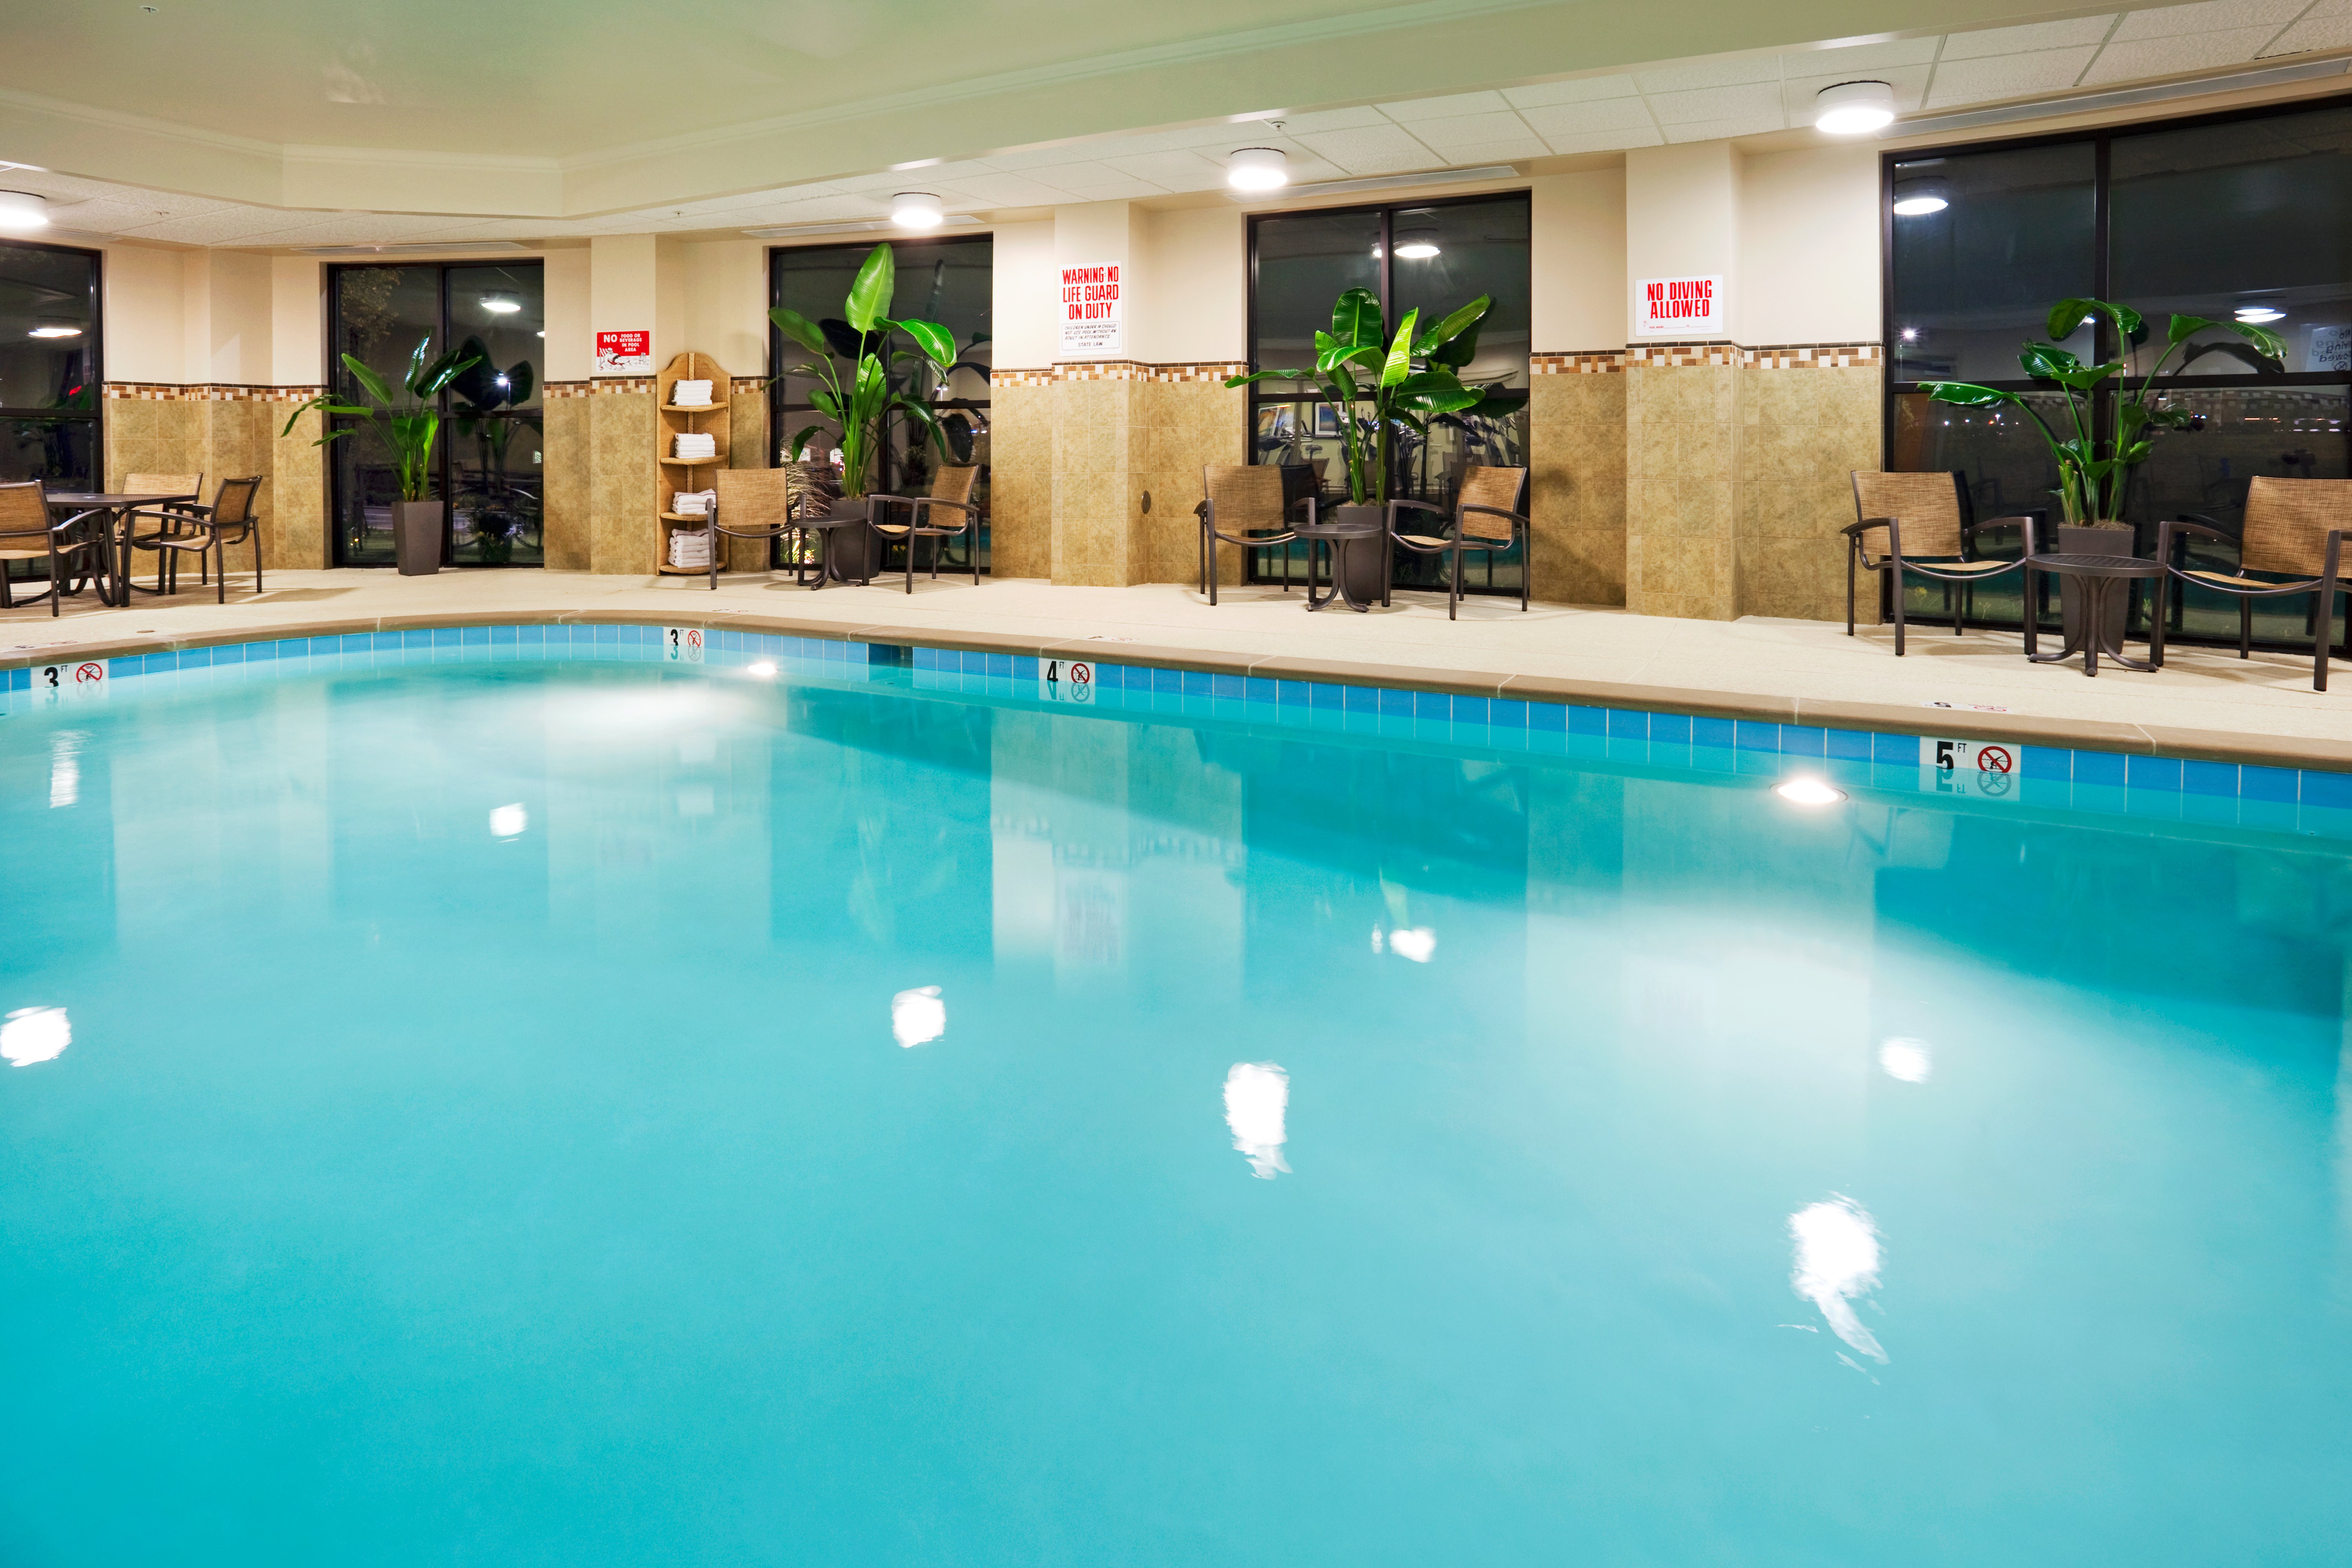 Indoor Heated Salt Water Swimming Pool